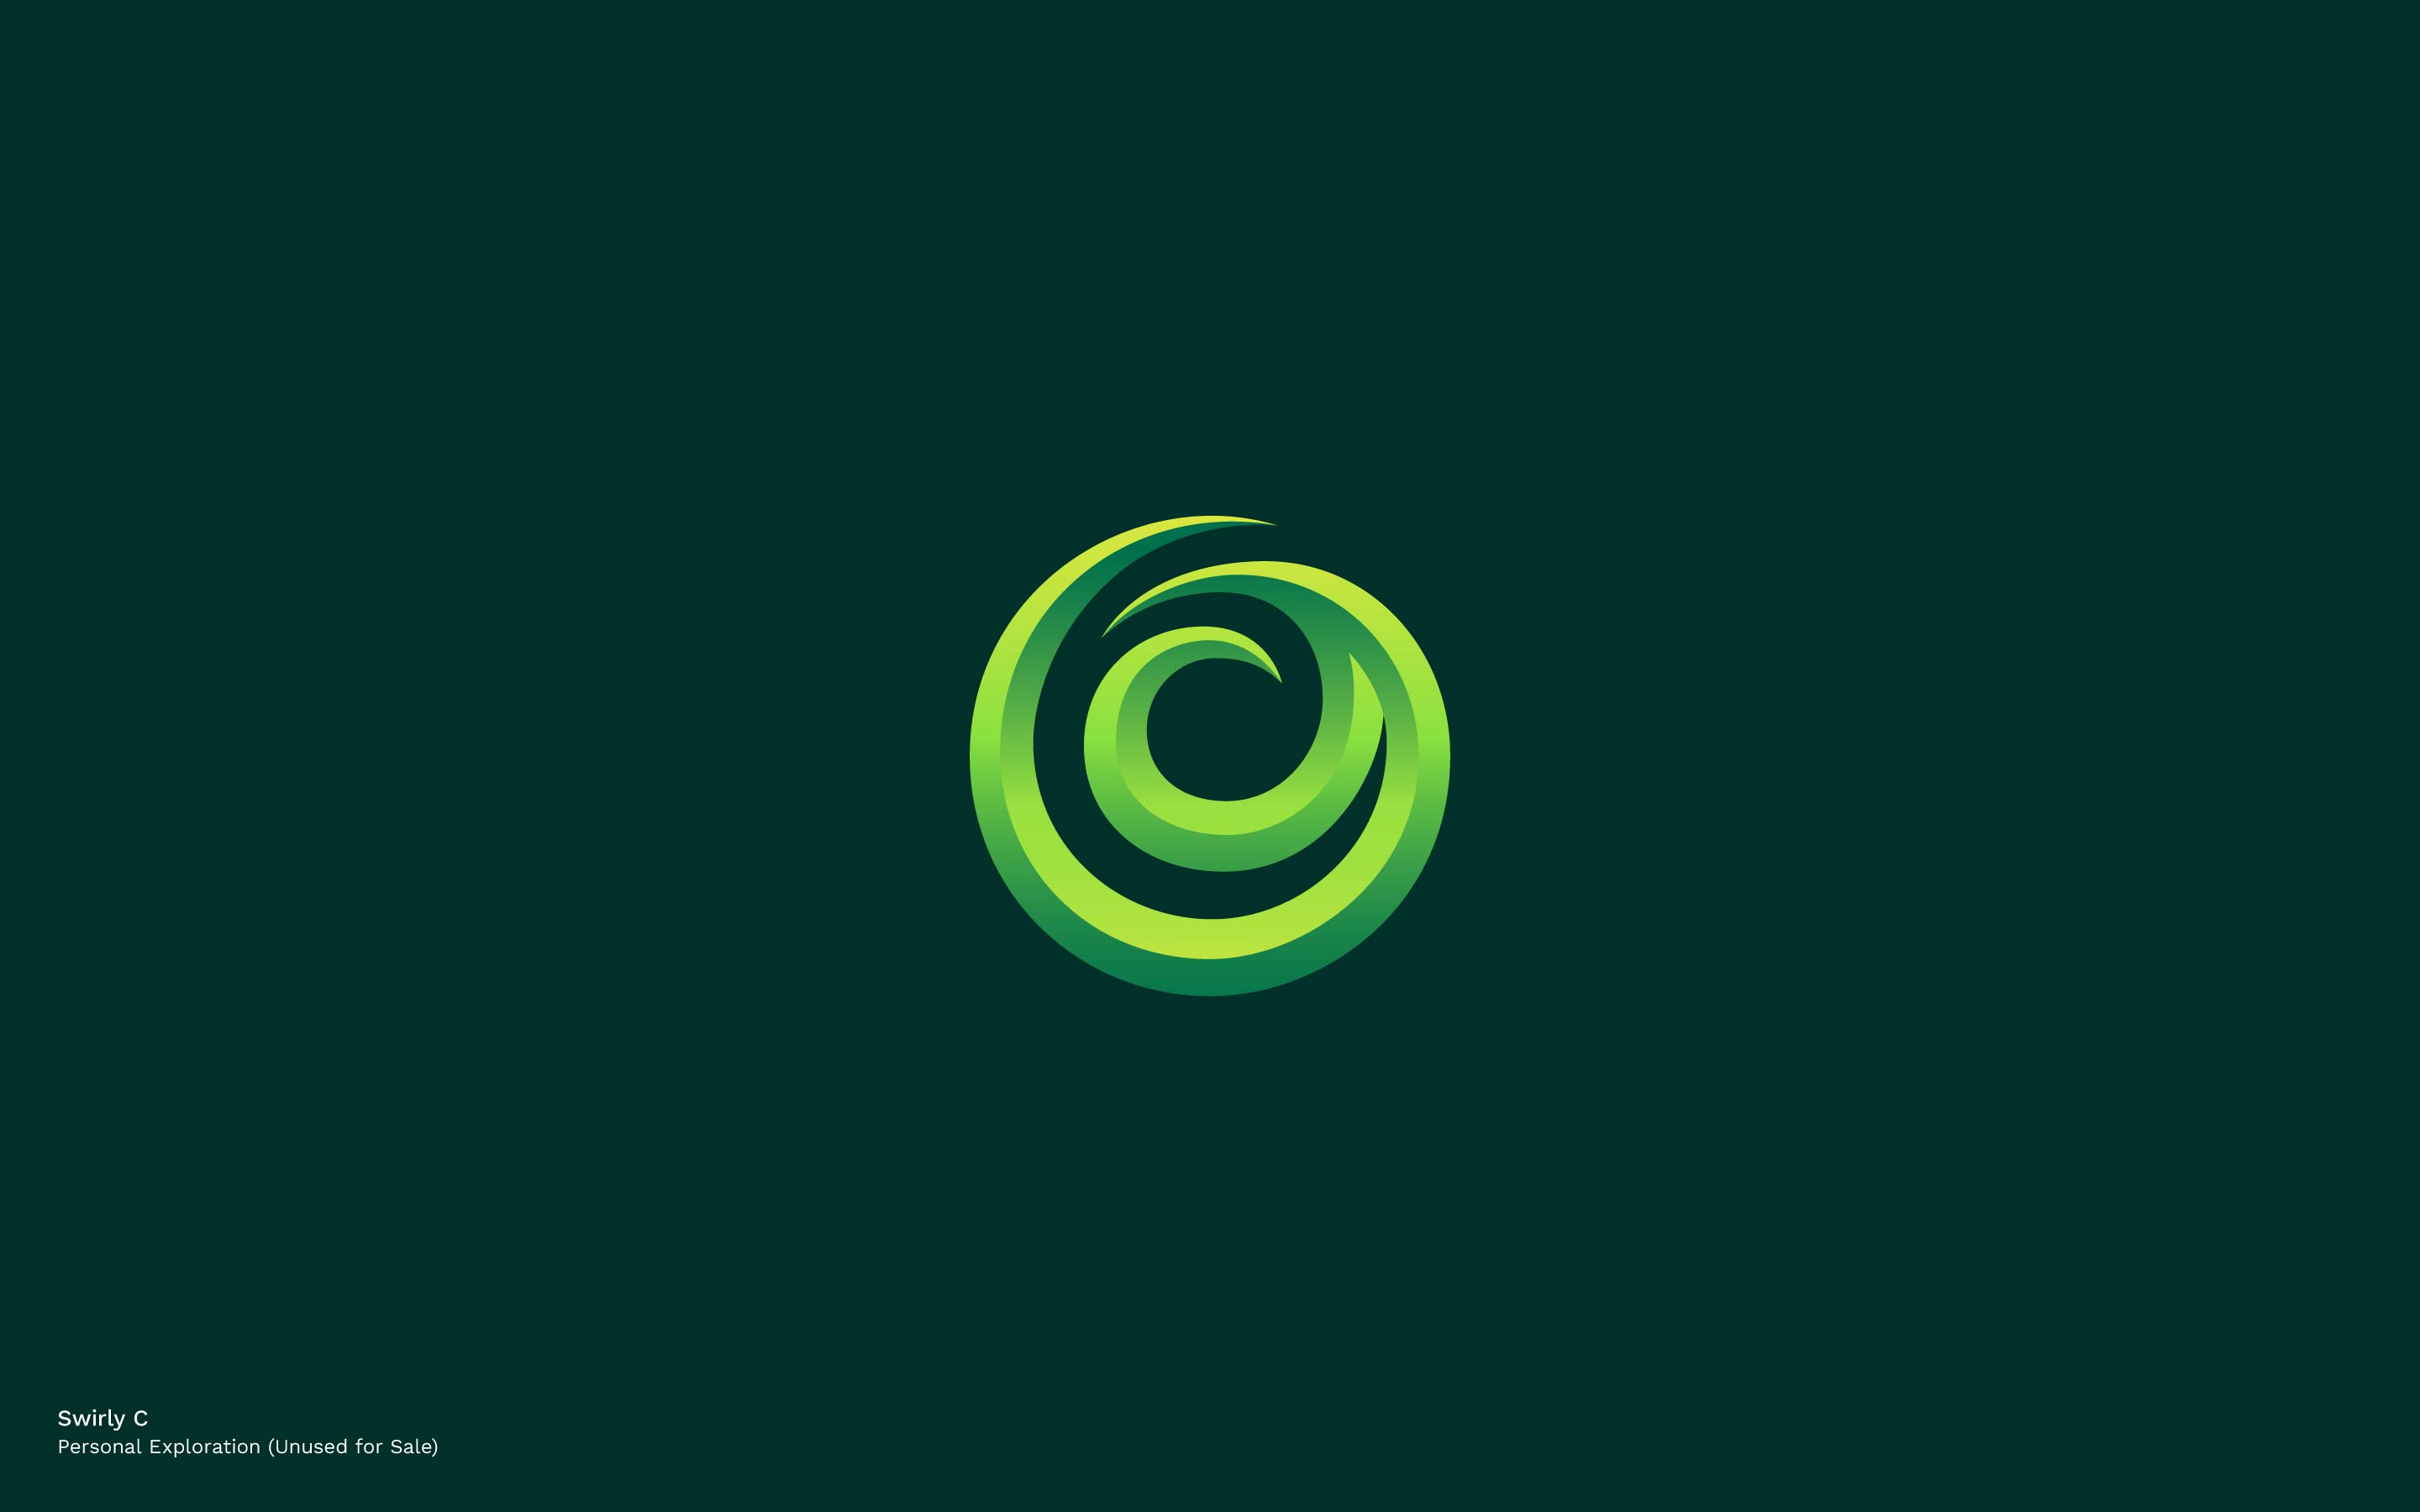 logo design based on swirly letter c by mihai dolganiuc design